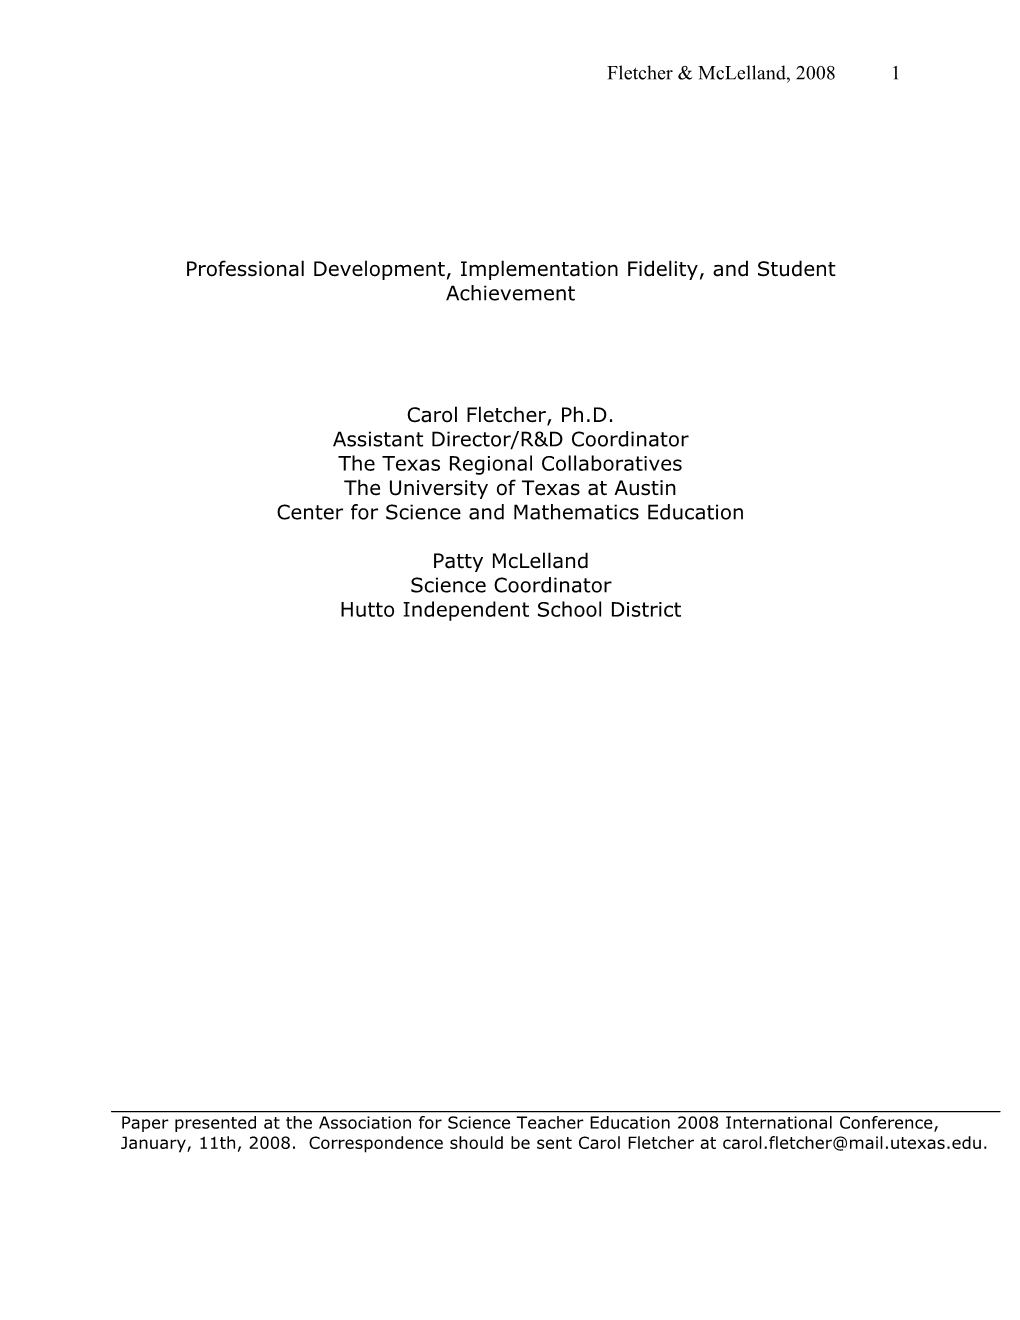 Professional Development, Implementation Fidelity, and Student Achievement